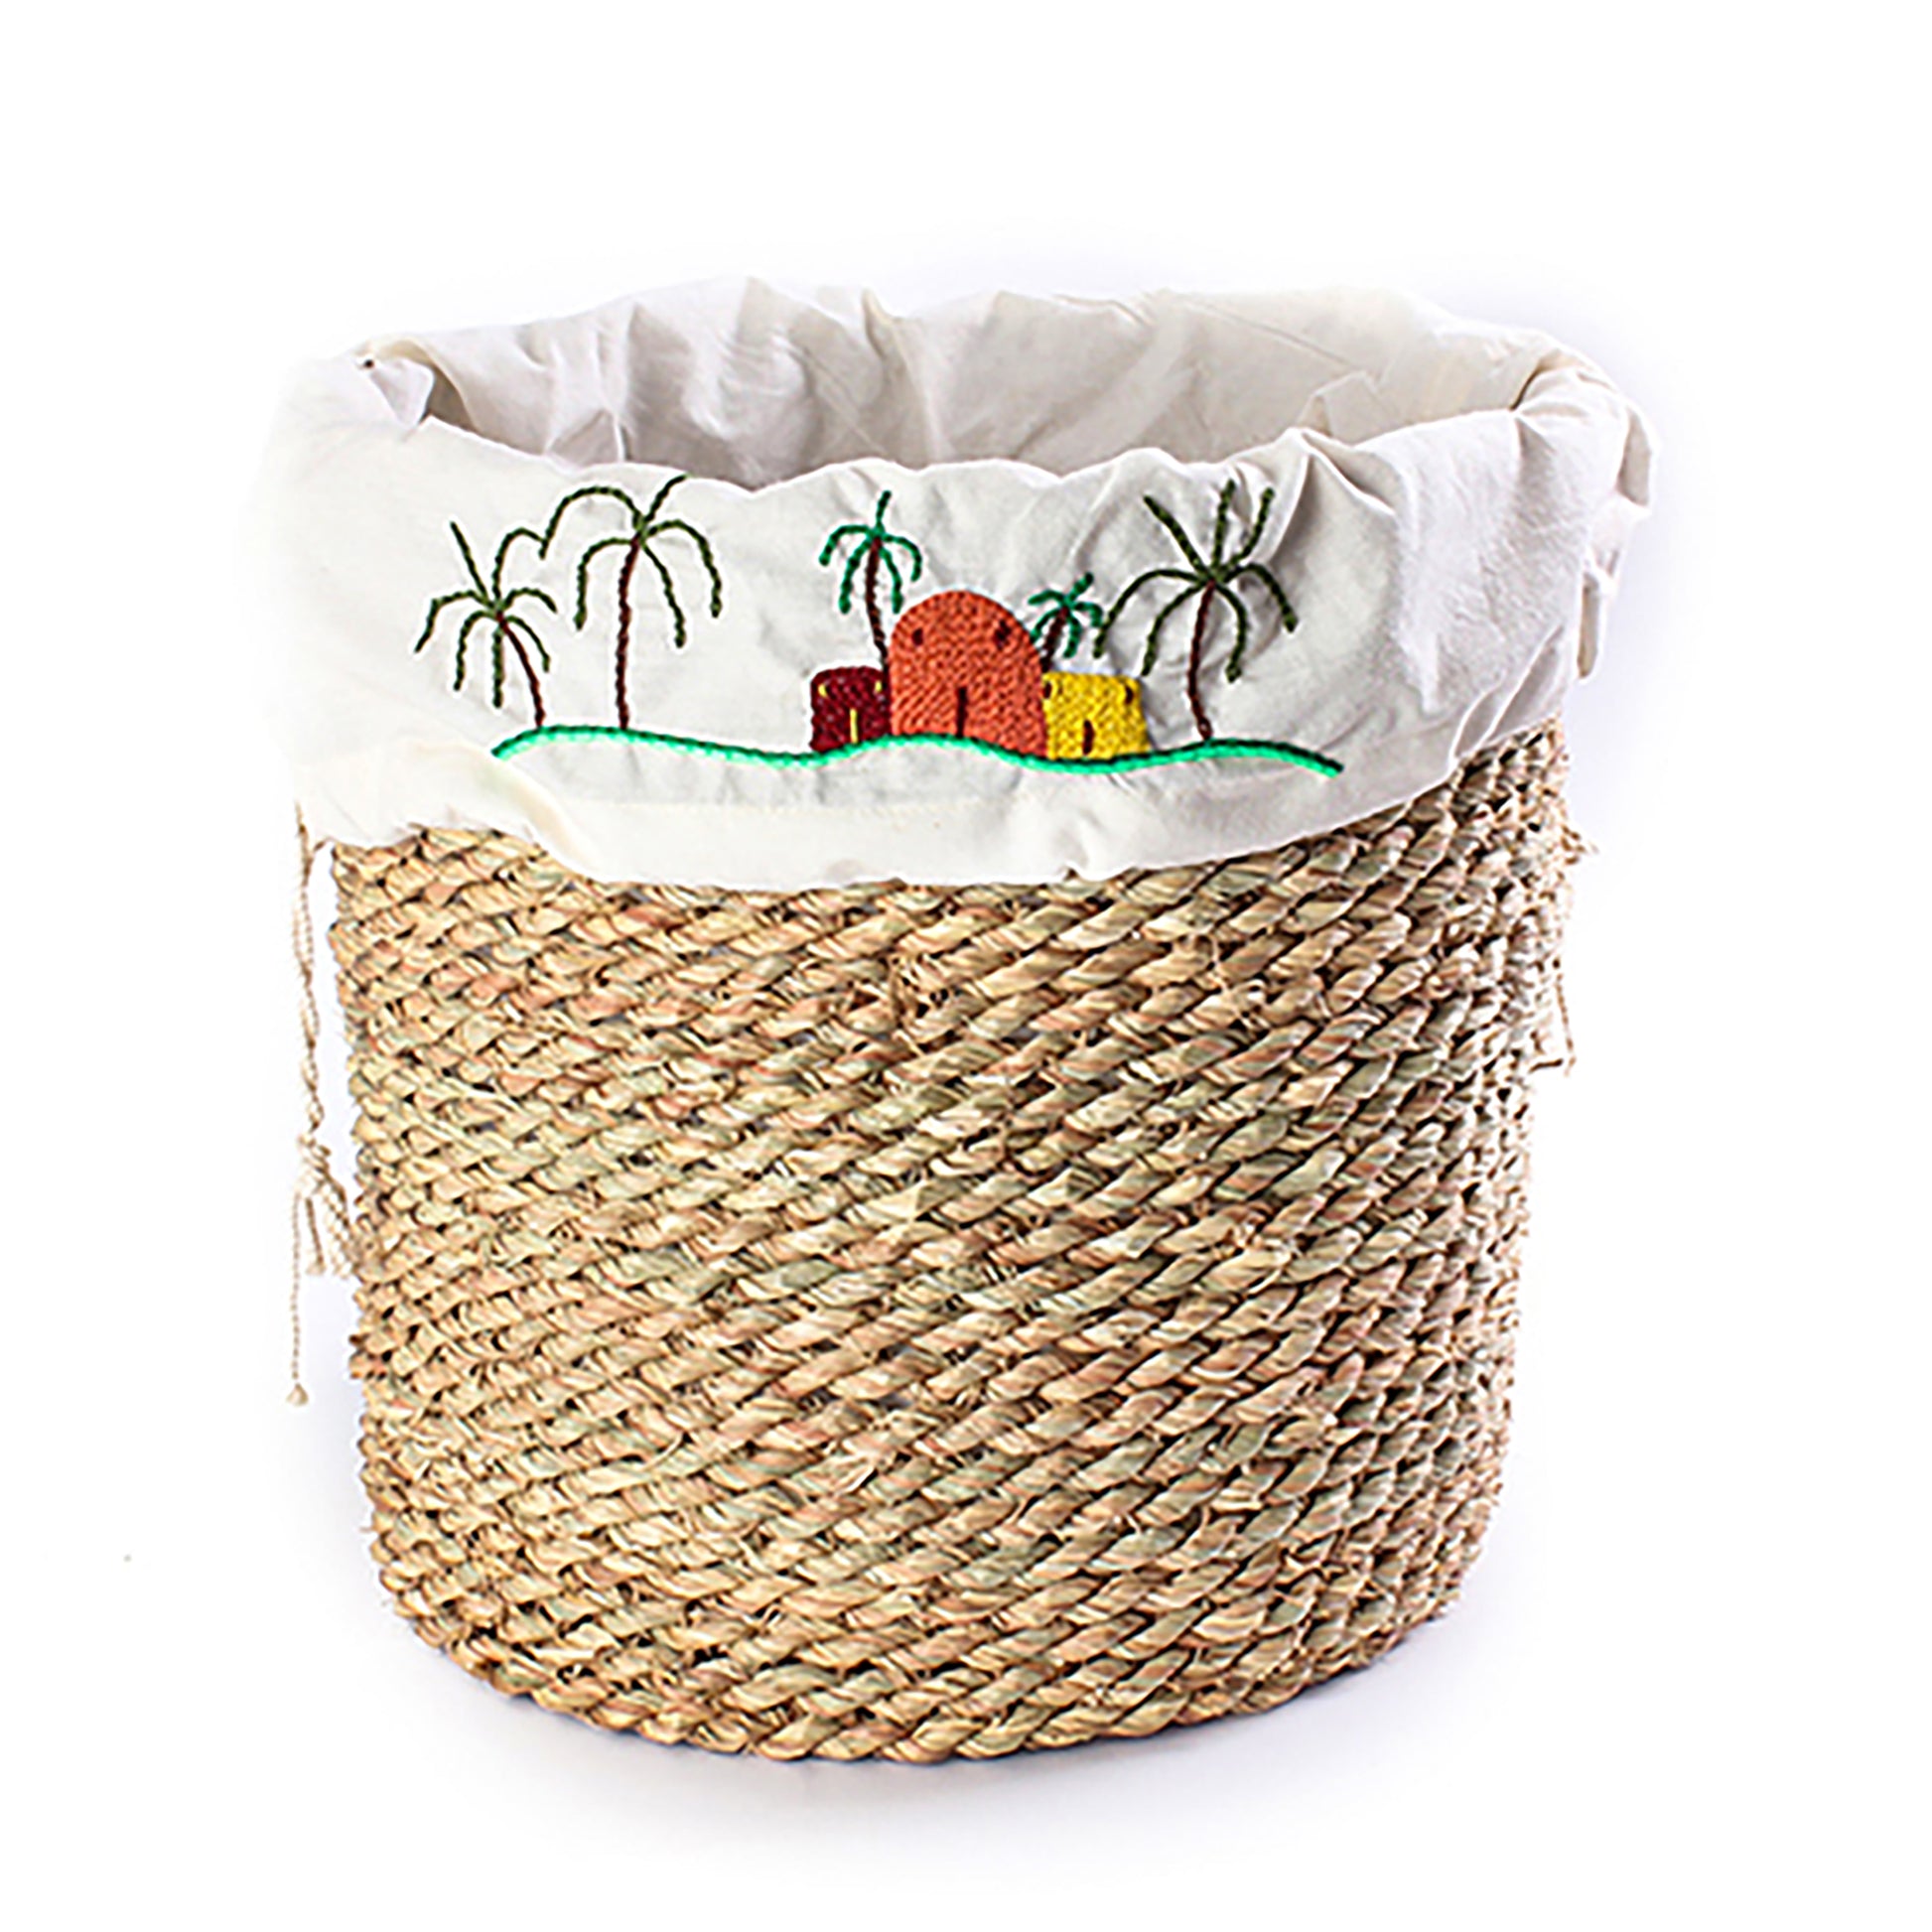 Halfa basket with embroidered pouch. سلة حلفا مع جراب مطرز